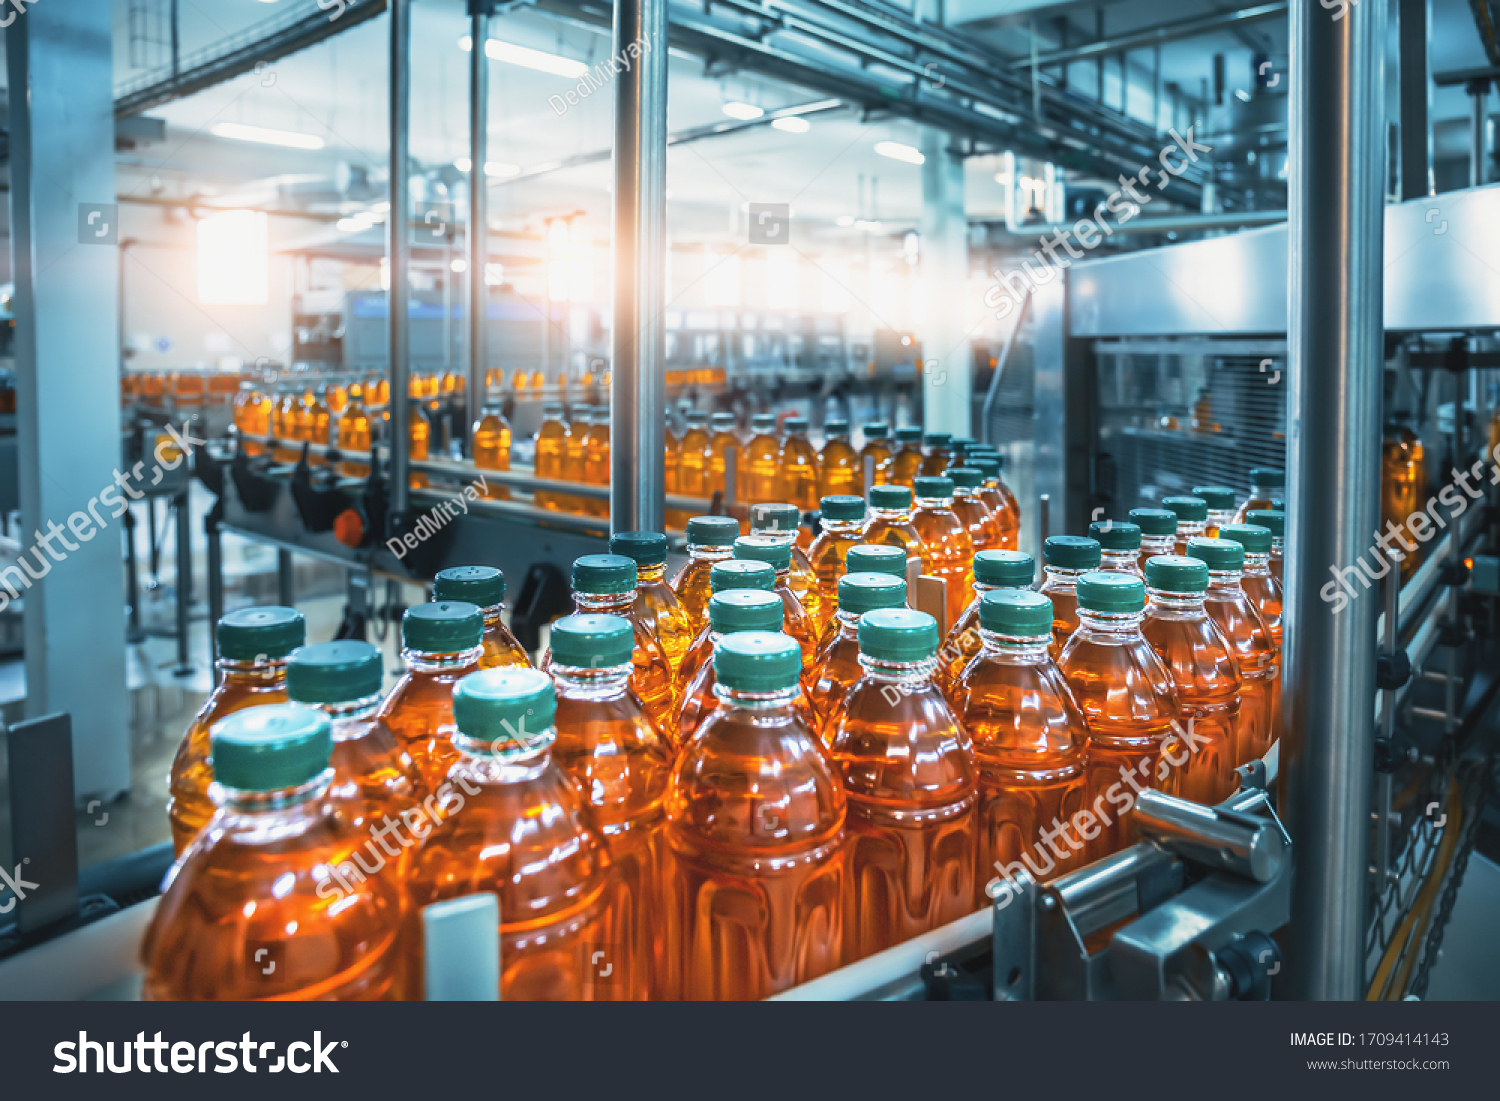 Conveyor belt, juice in bottles, beverage factory interior in blue color, industrial production line. #1709414143